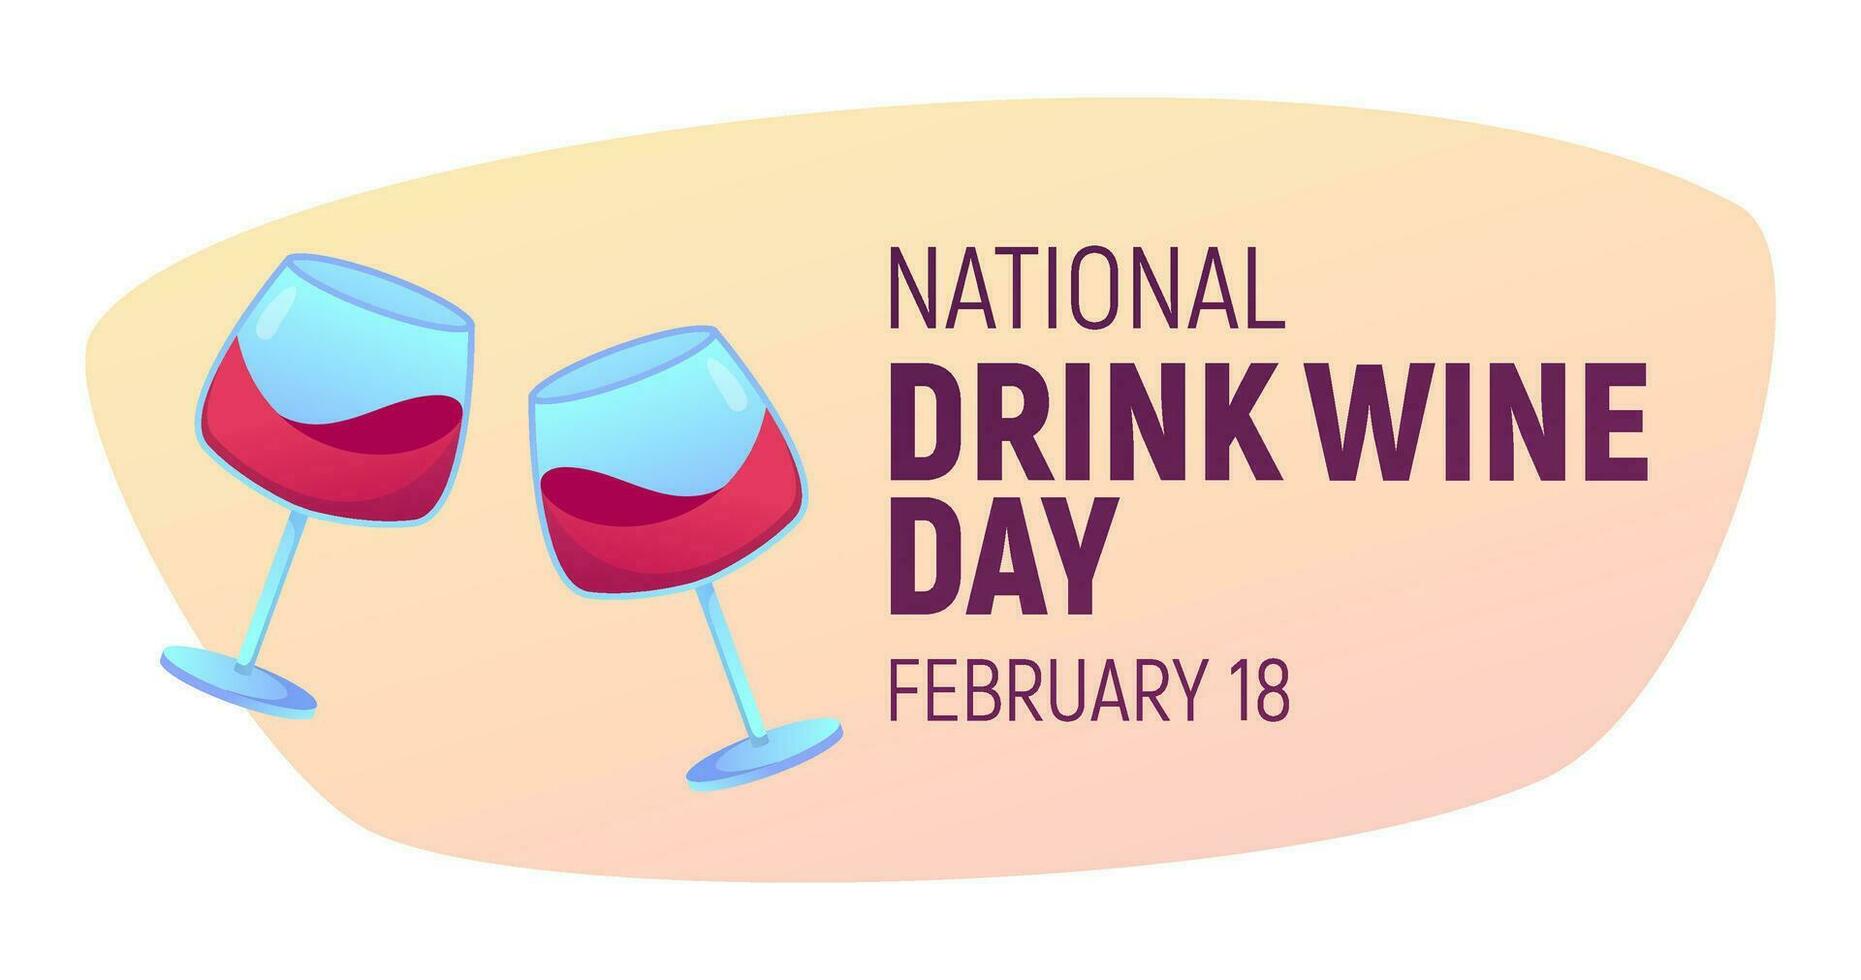 National Wein Tag Februar 18 .. vektor